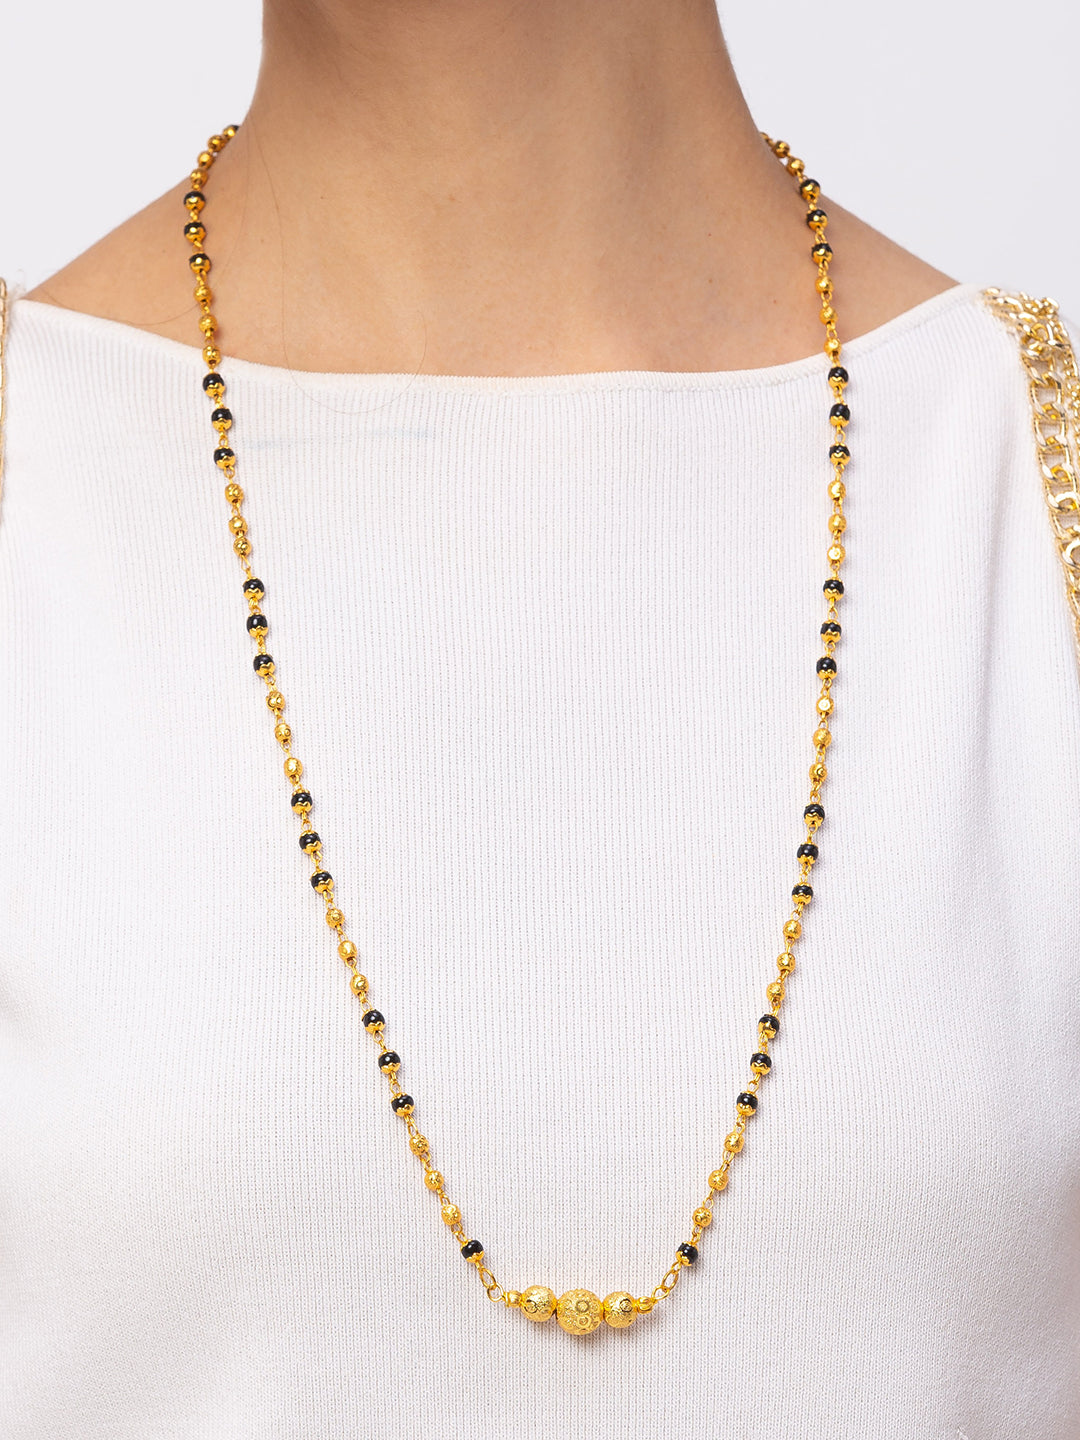 image for Digital Dress Room One Gram Gold Plated Long Mangalsutra मंगलसूत्र Latest Design Tanmaniya/Long Gold Chain/Black Gold Beads New Mangalsutra Designs For Women (29 Inch)